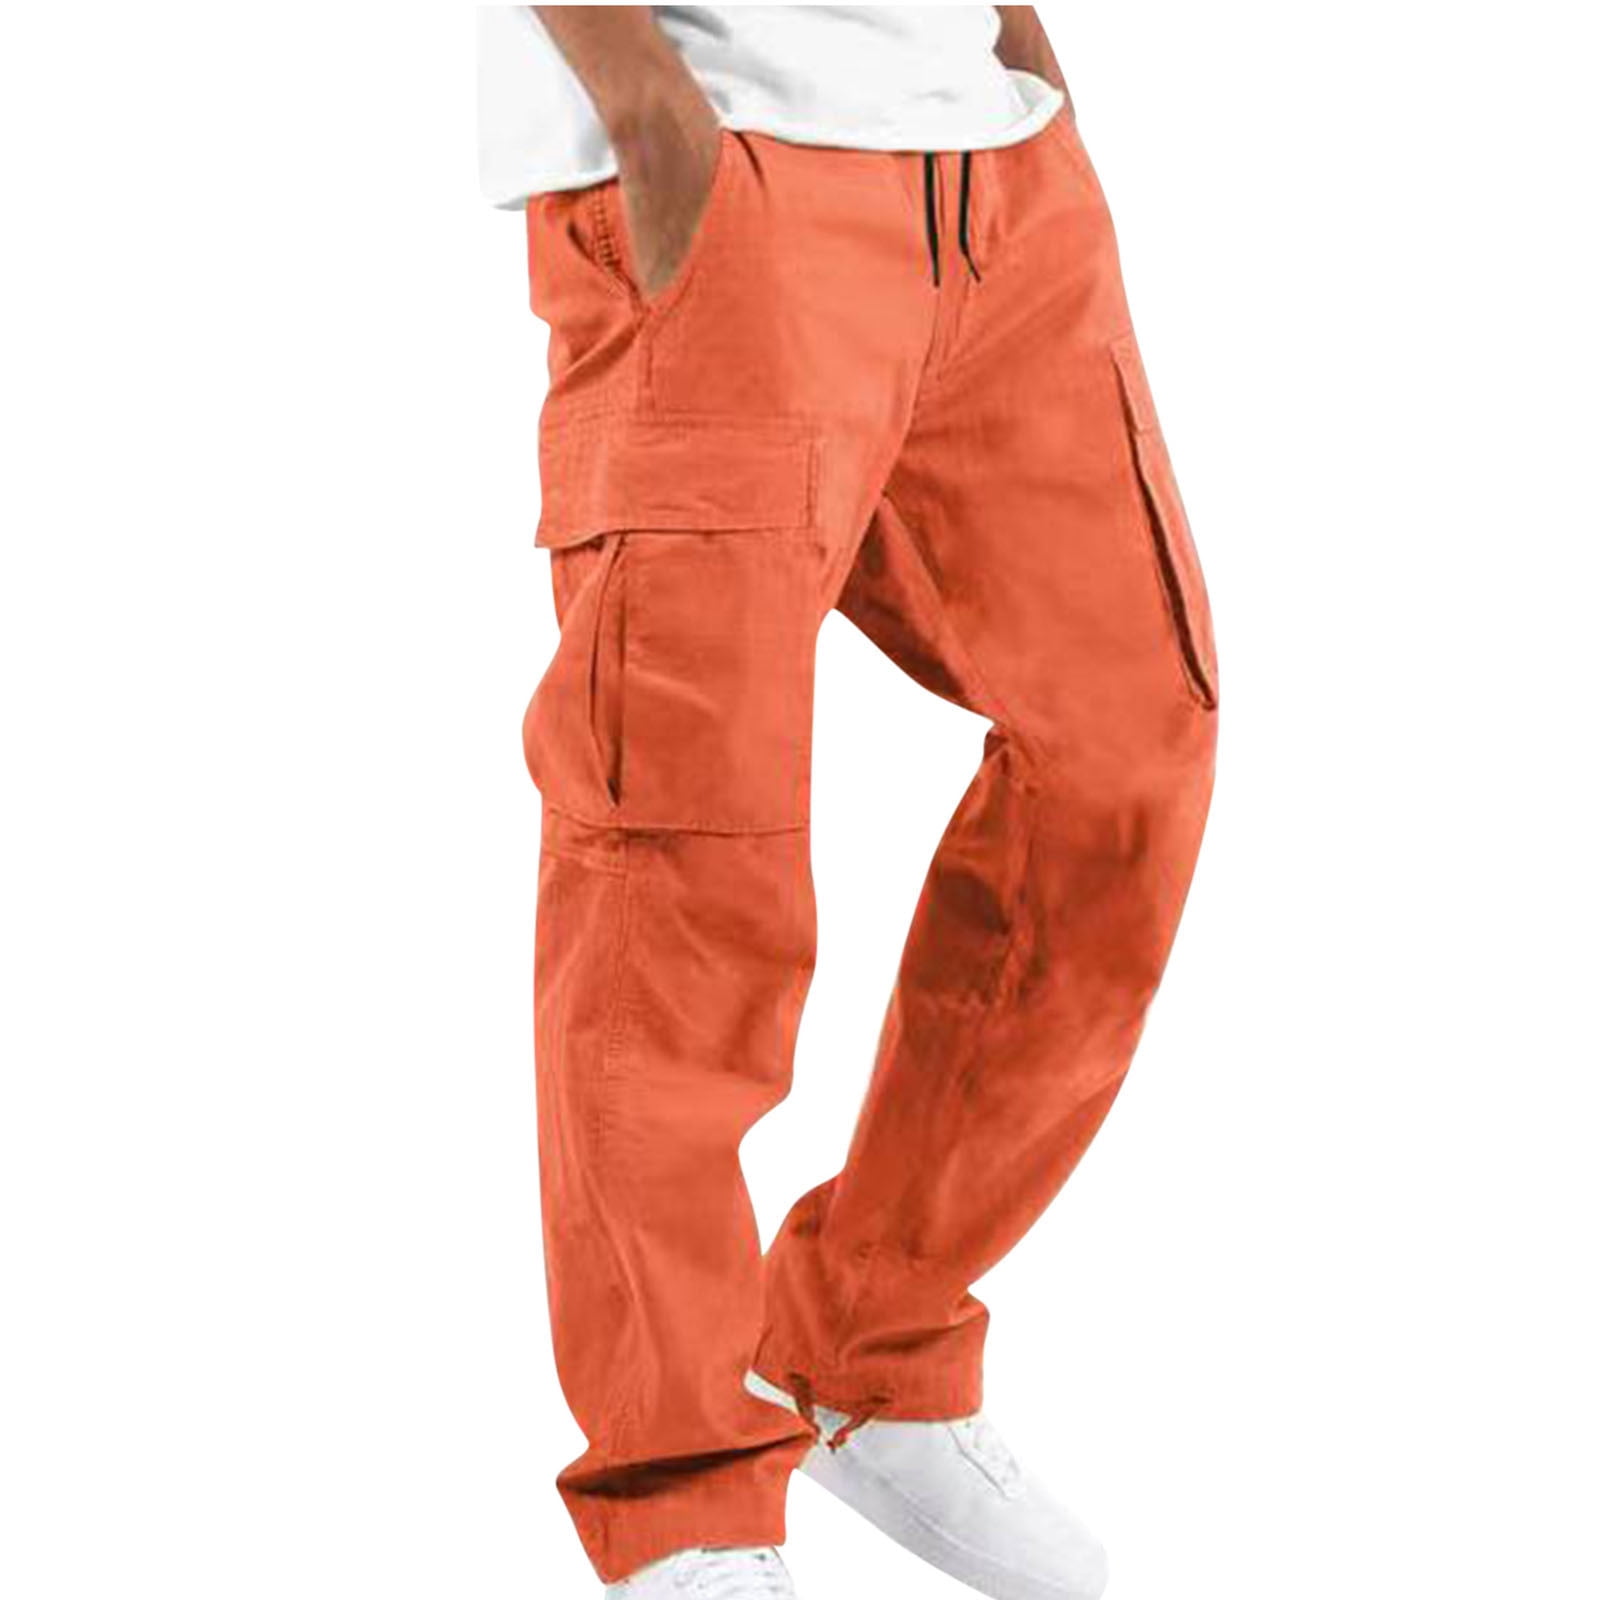 Cargo Baggy Orange Pants Men Summer Hip Hop Men's Clothing Cotton